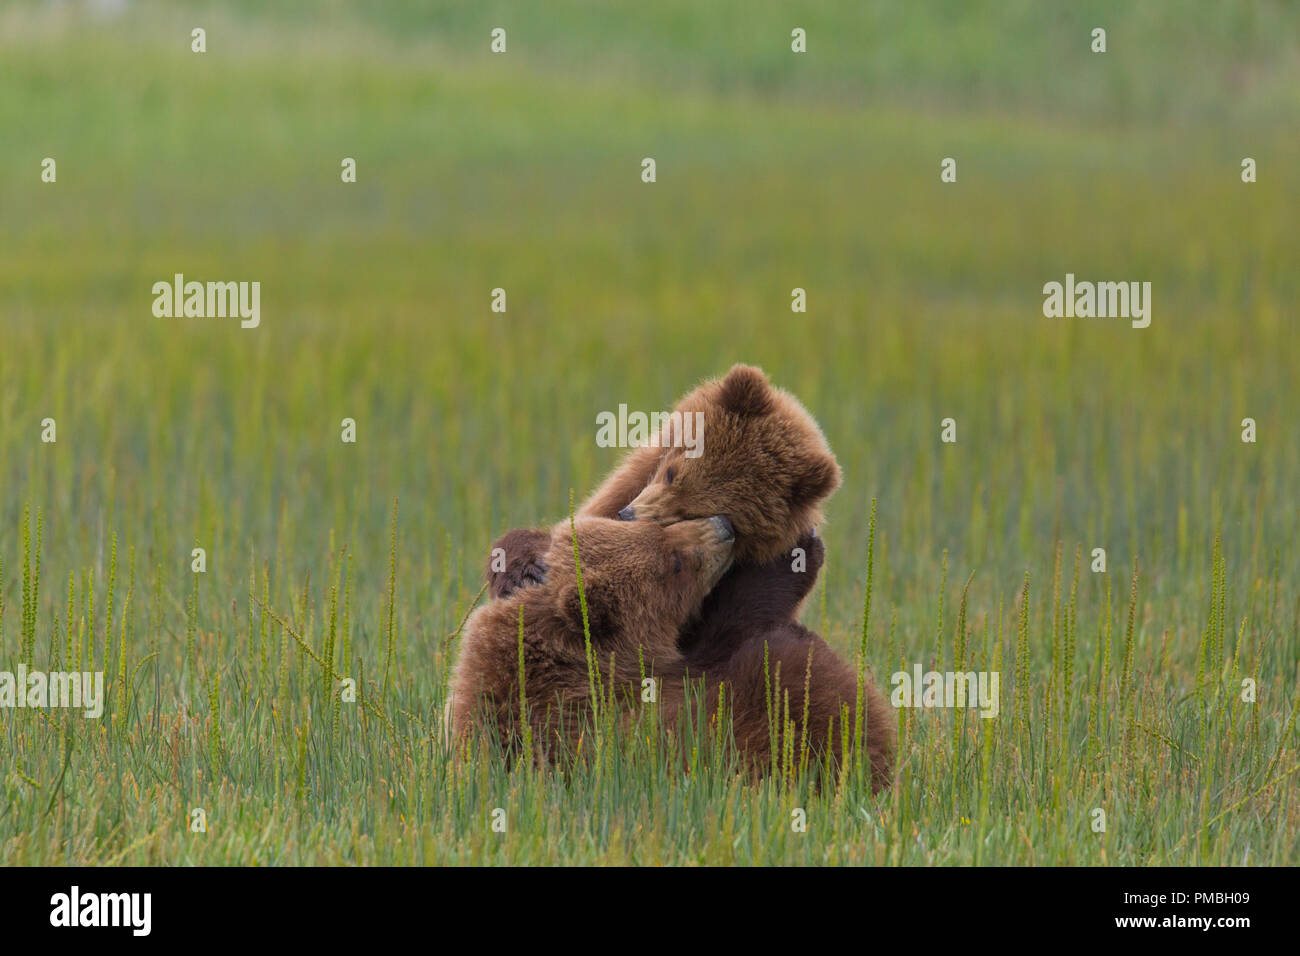 A Brown or Grizzly Bear, Lake Clark National Park, Alaska. Stock Photo